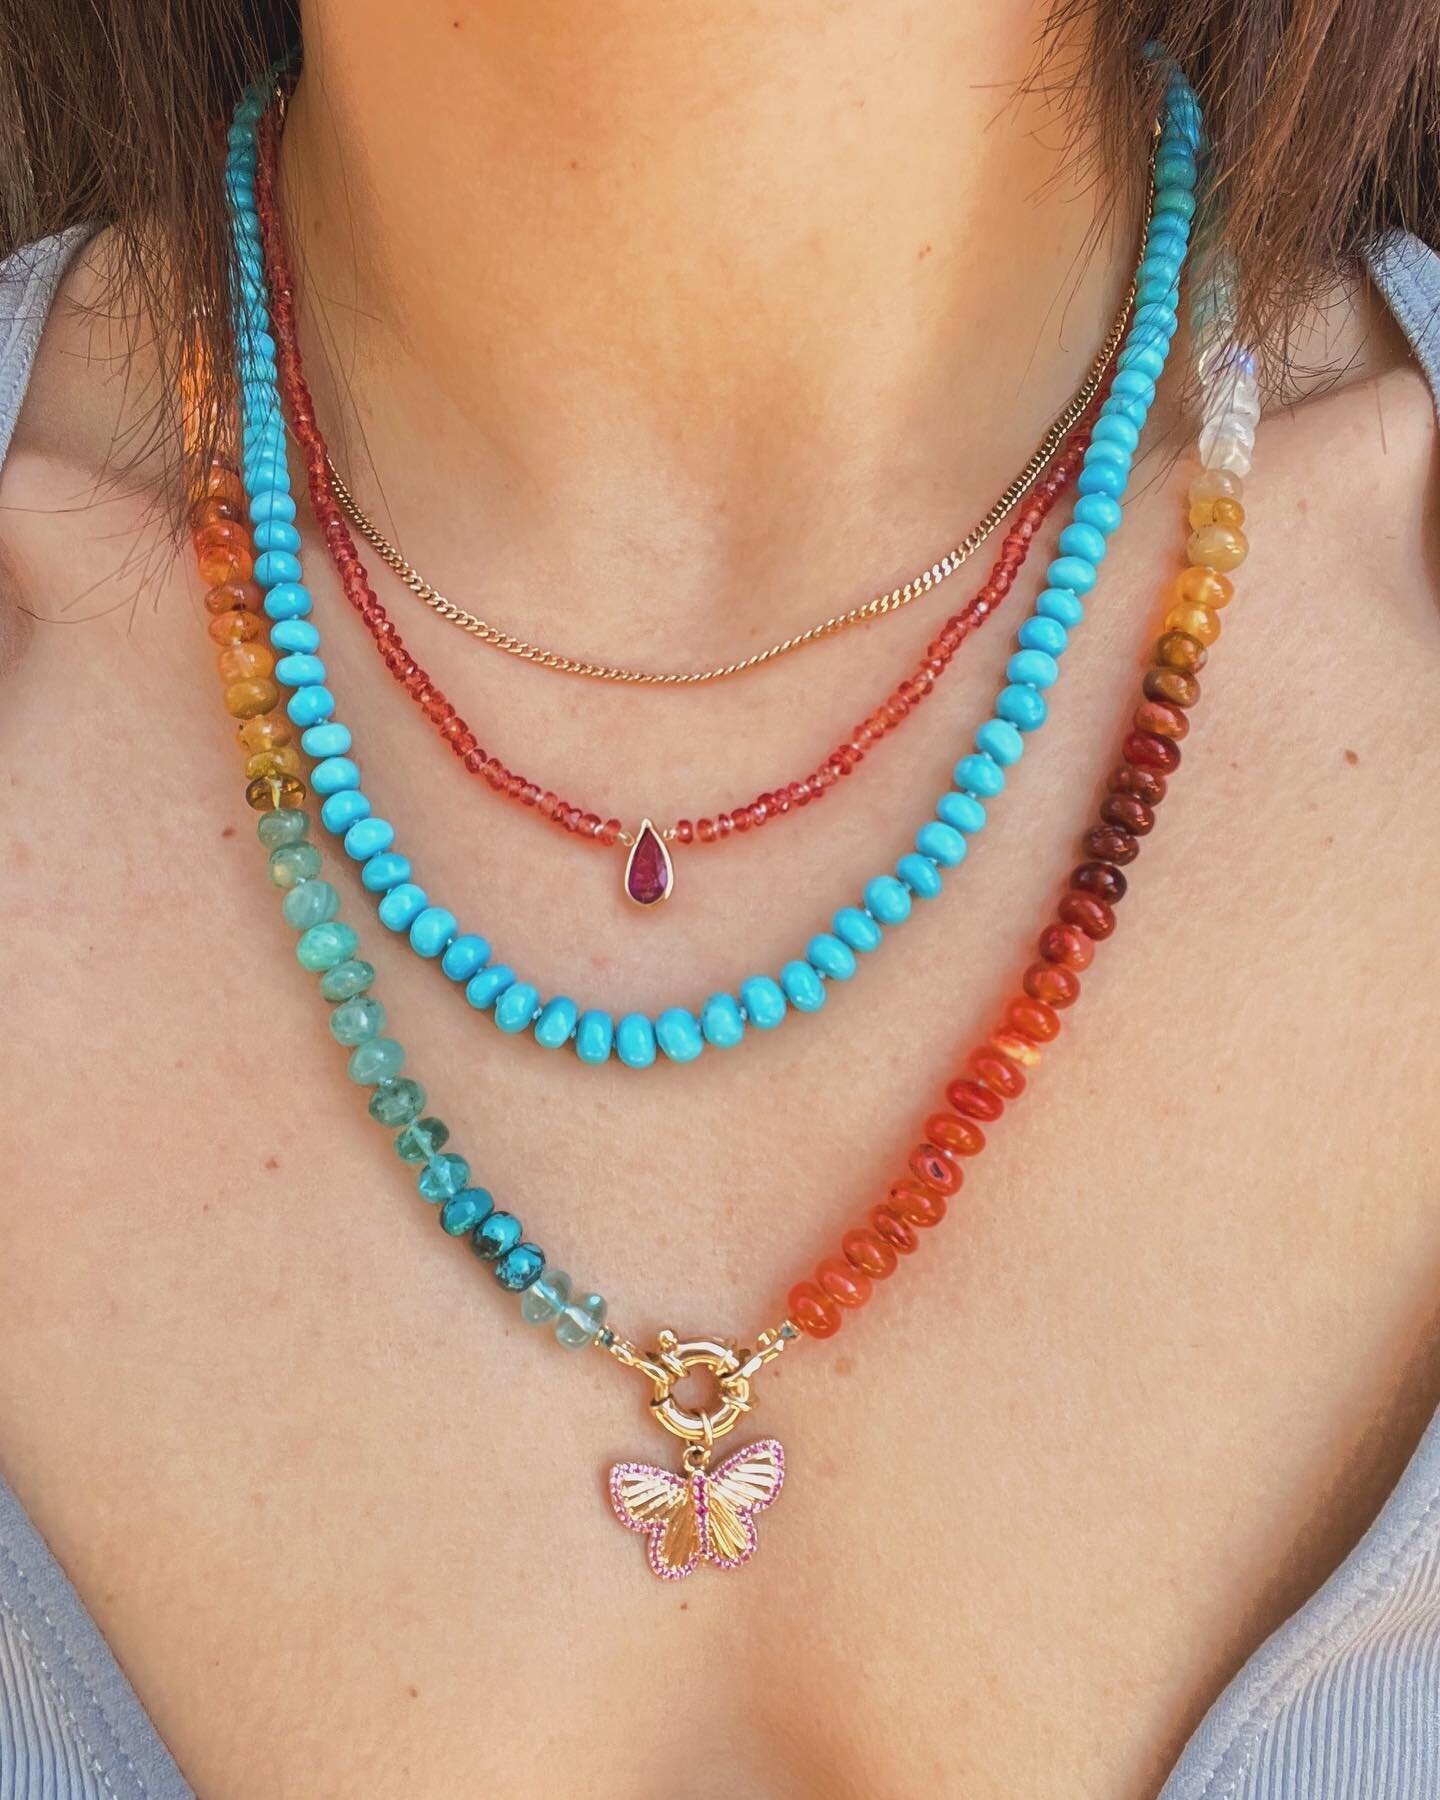 Forever favorite combo🤍

#neckmessoftheday #turquoise #encirkledjewelry